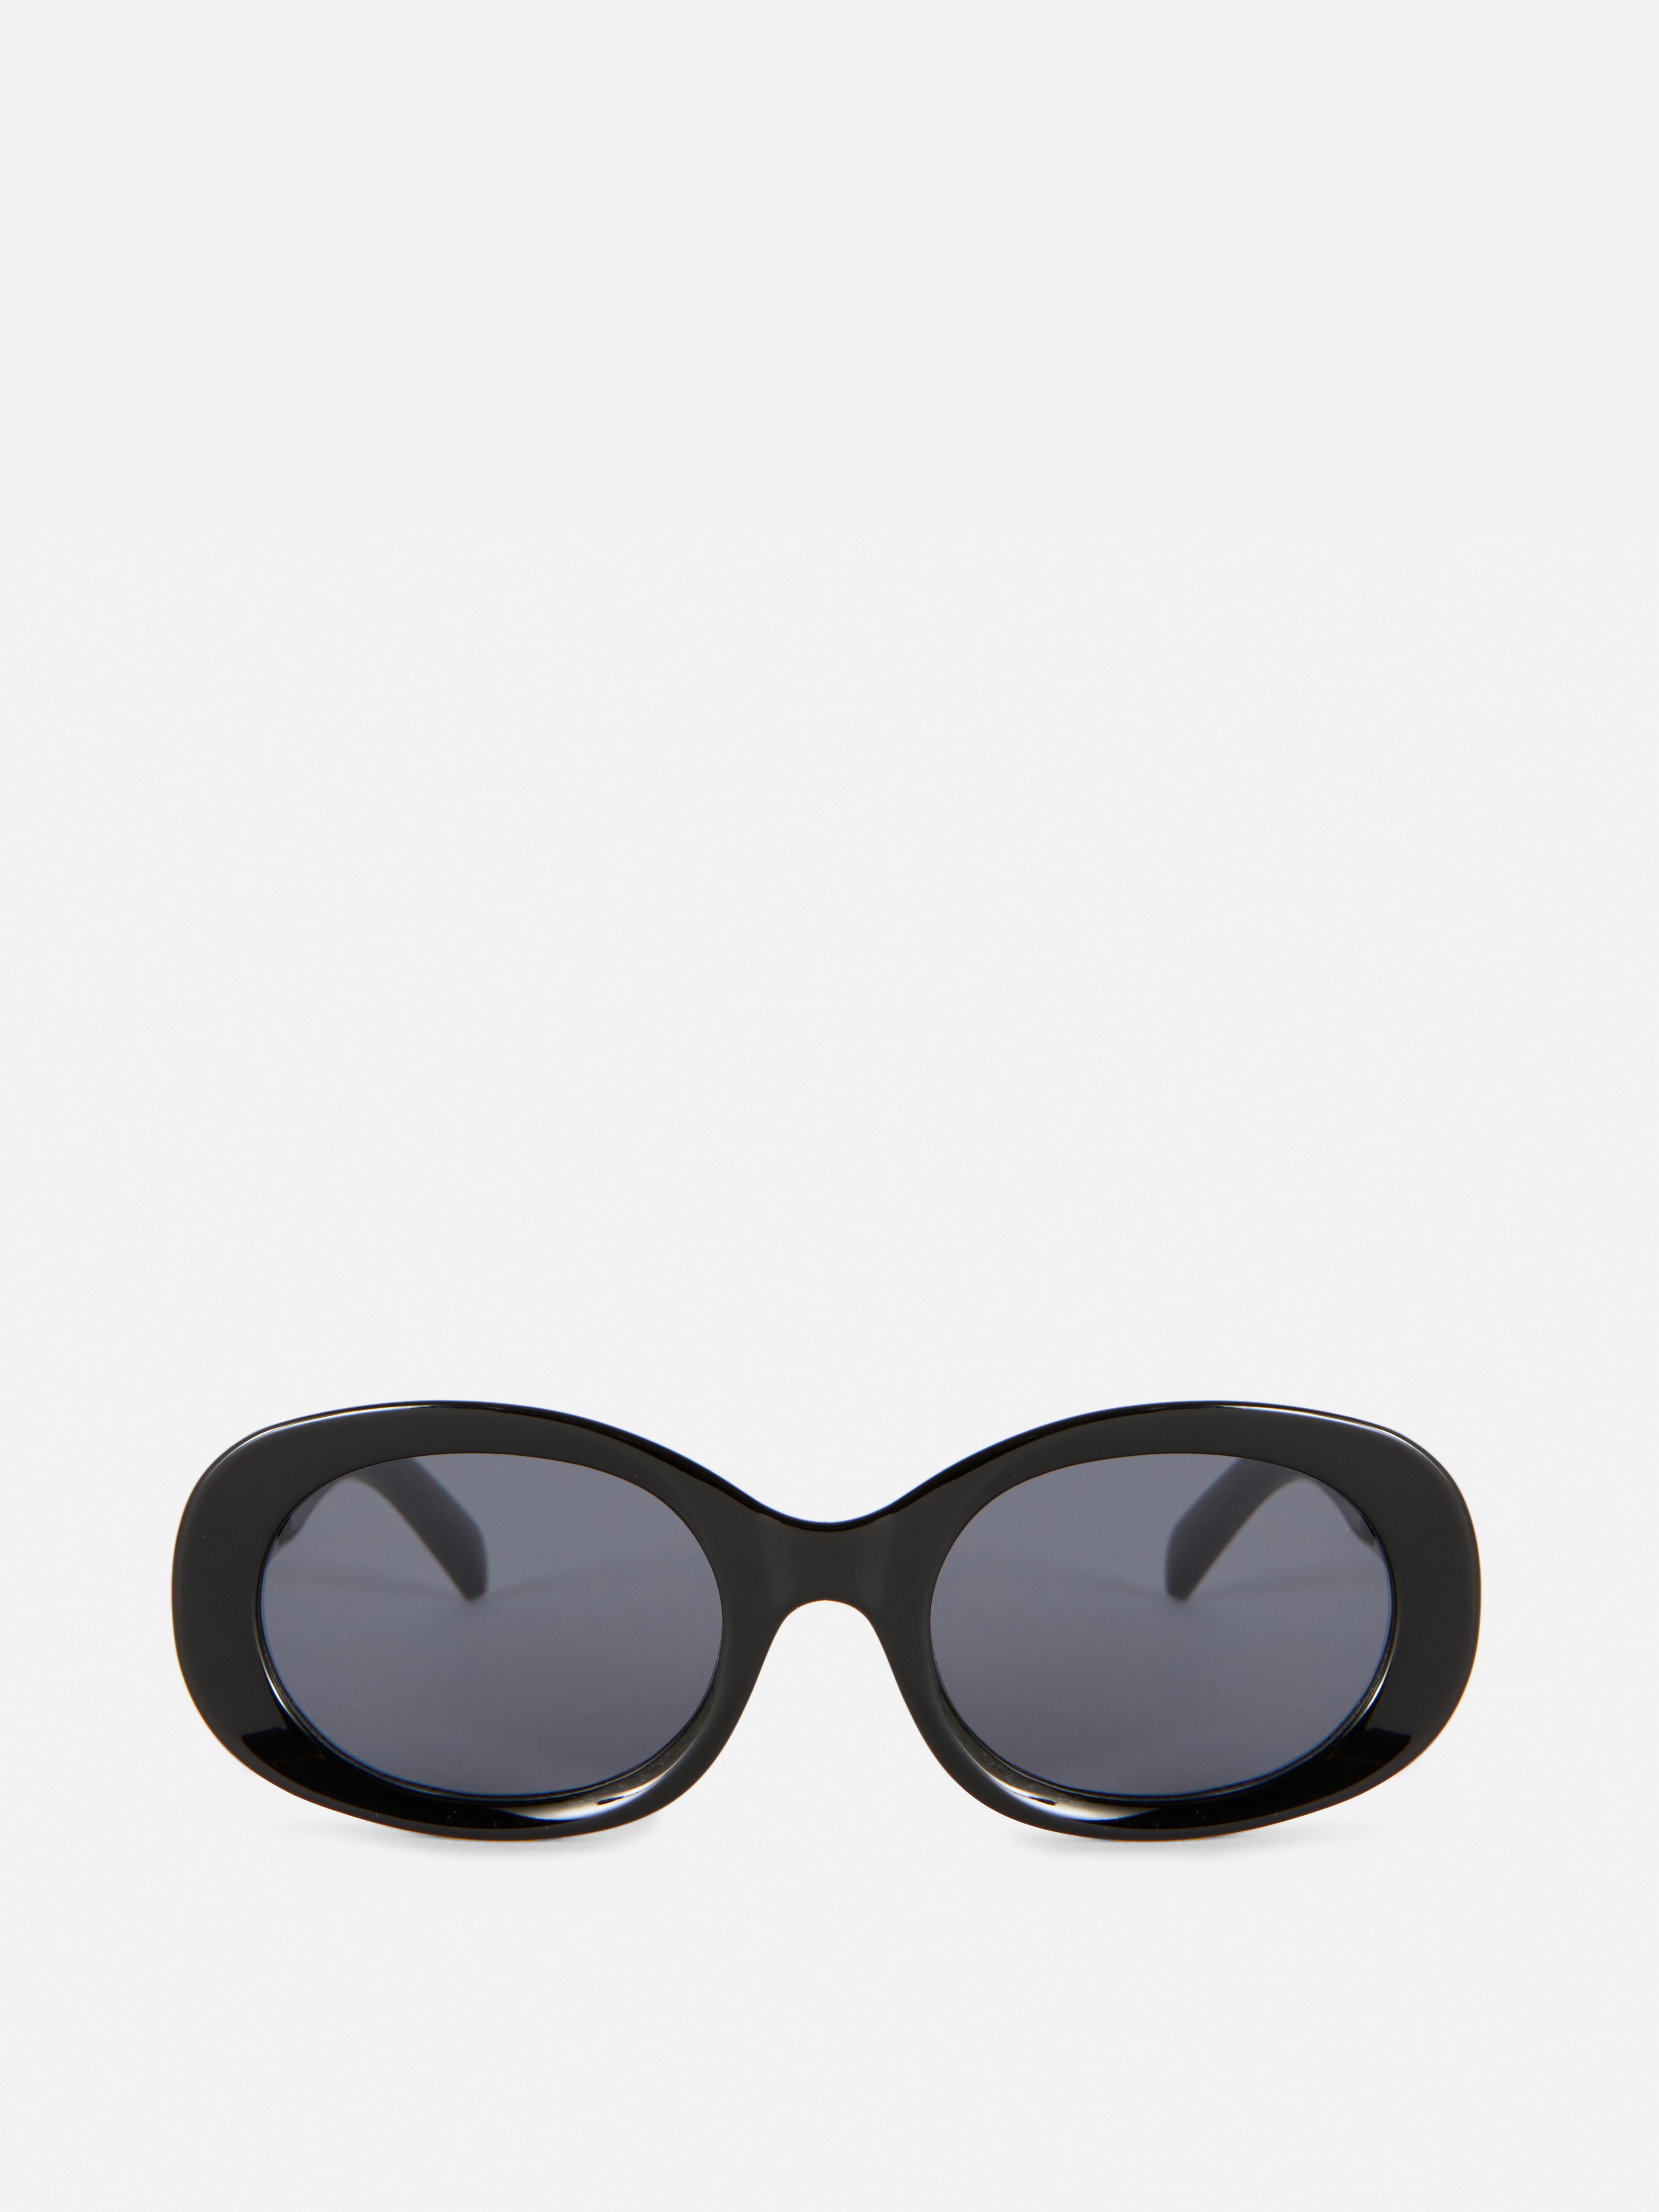 Rita Ora Chunky Oval Sunglasses